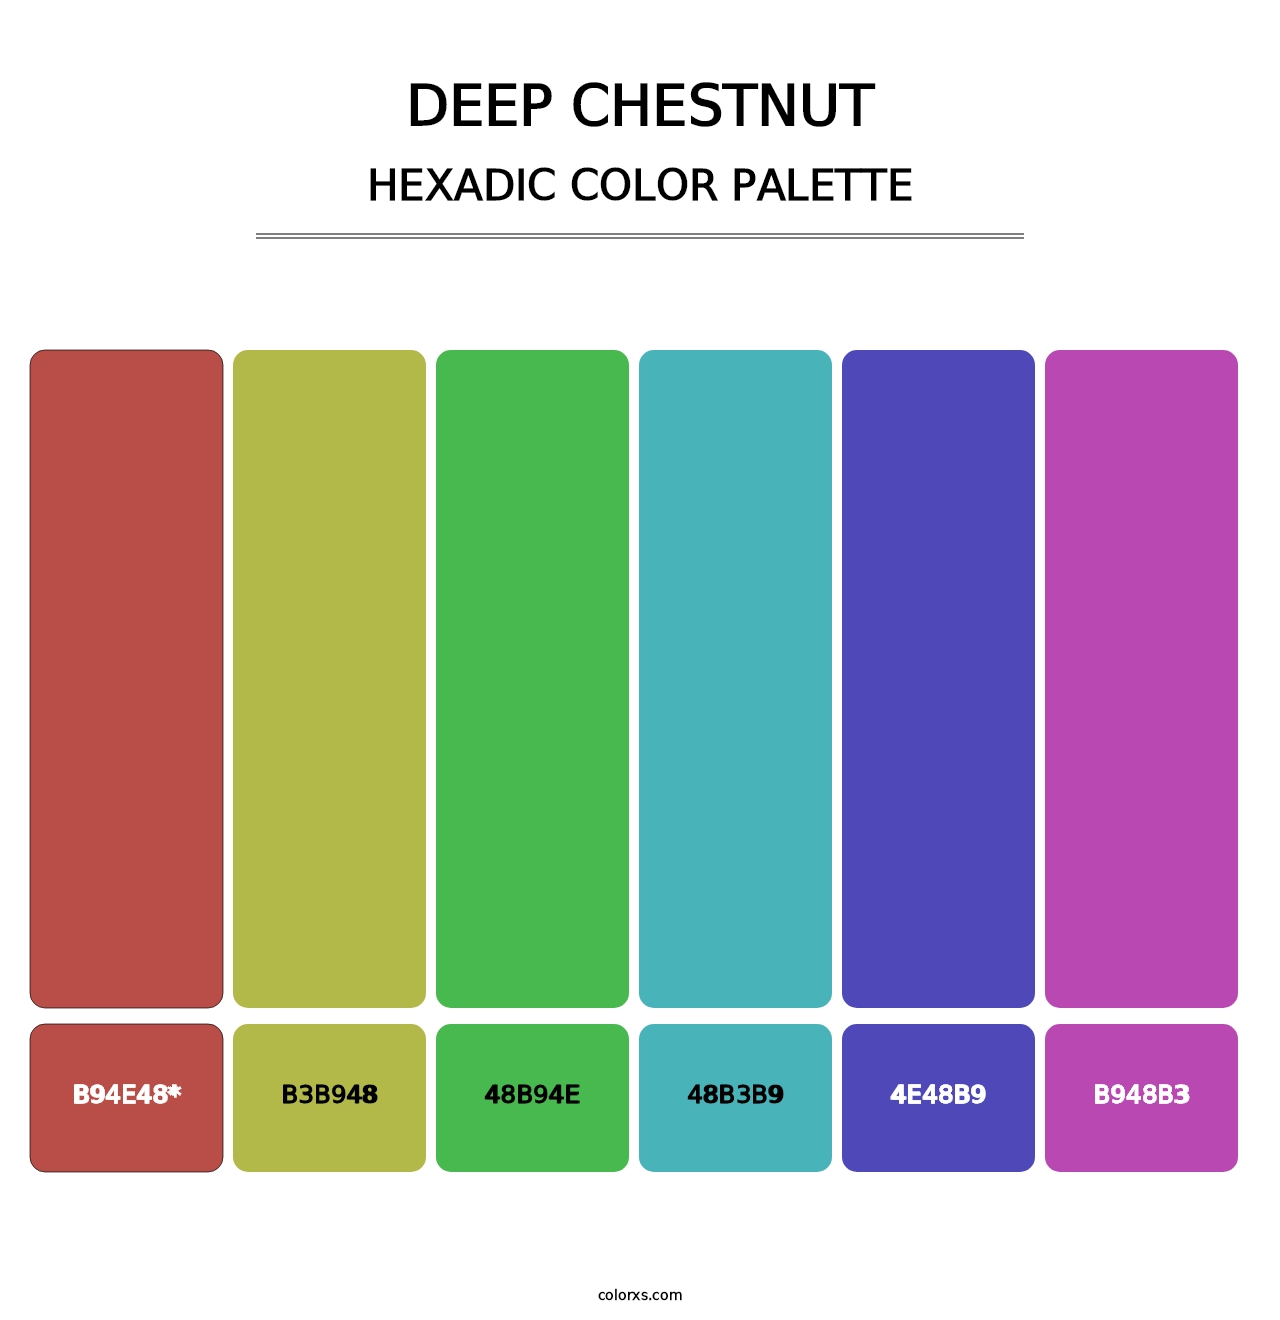 Deep Chestnut - Hexadic Color Palette